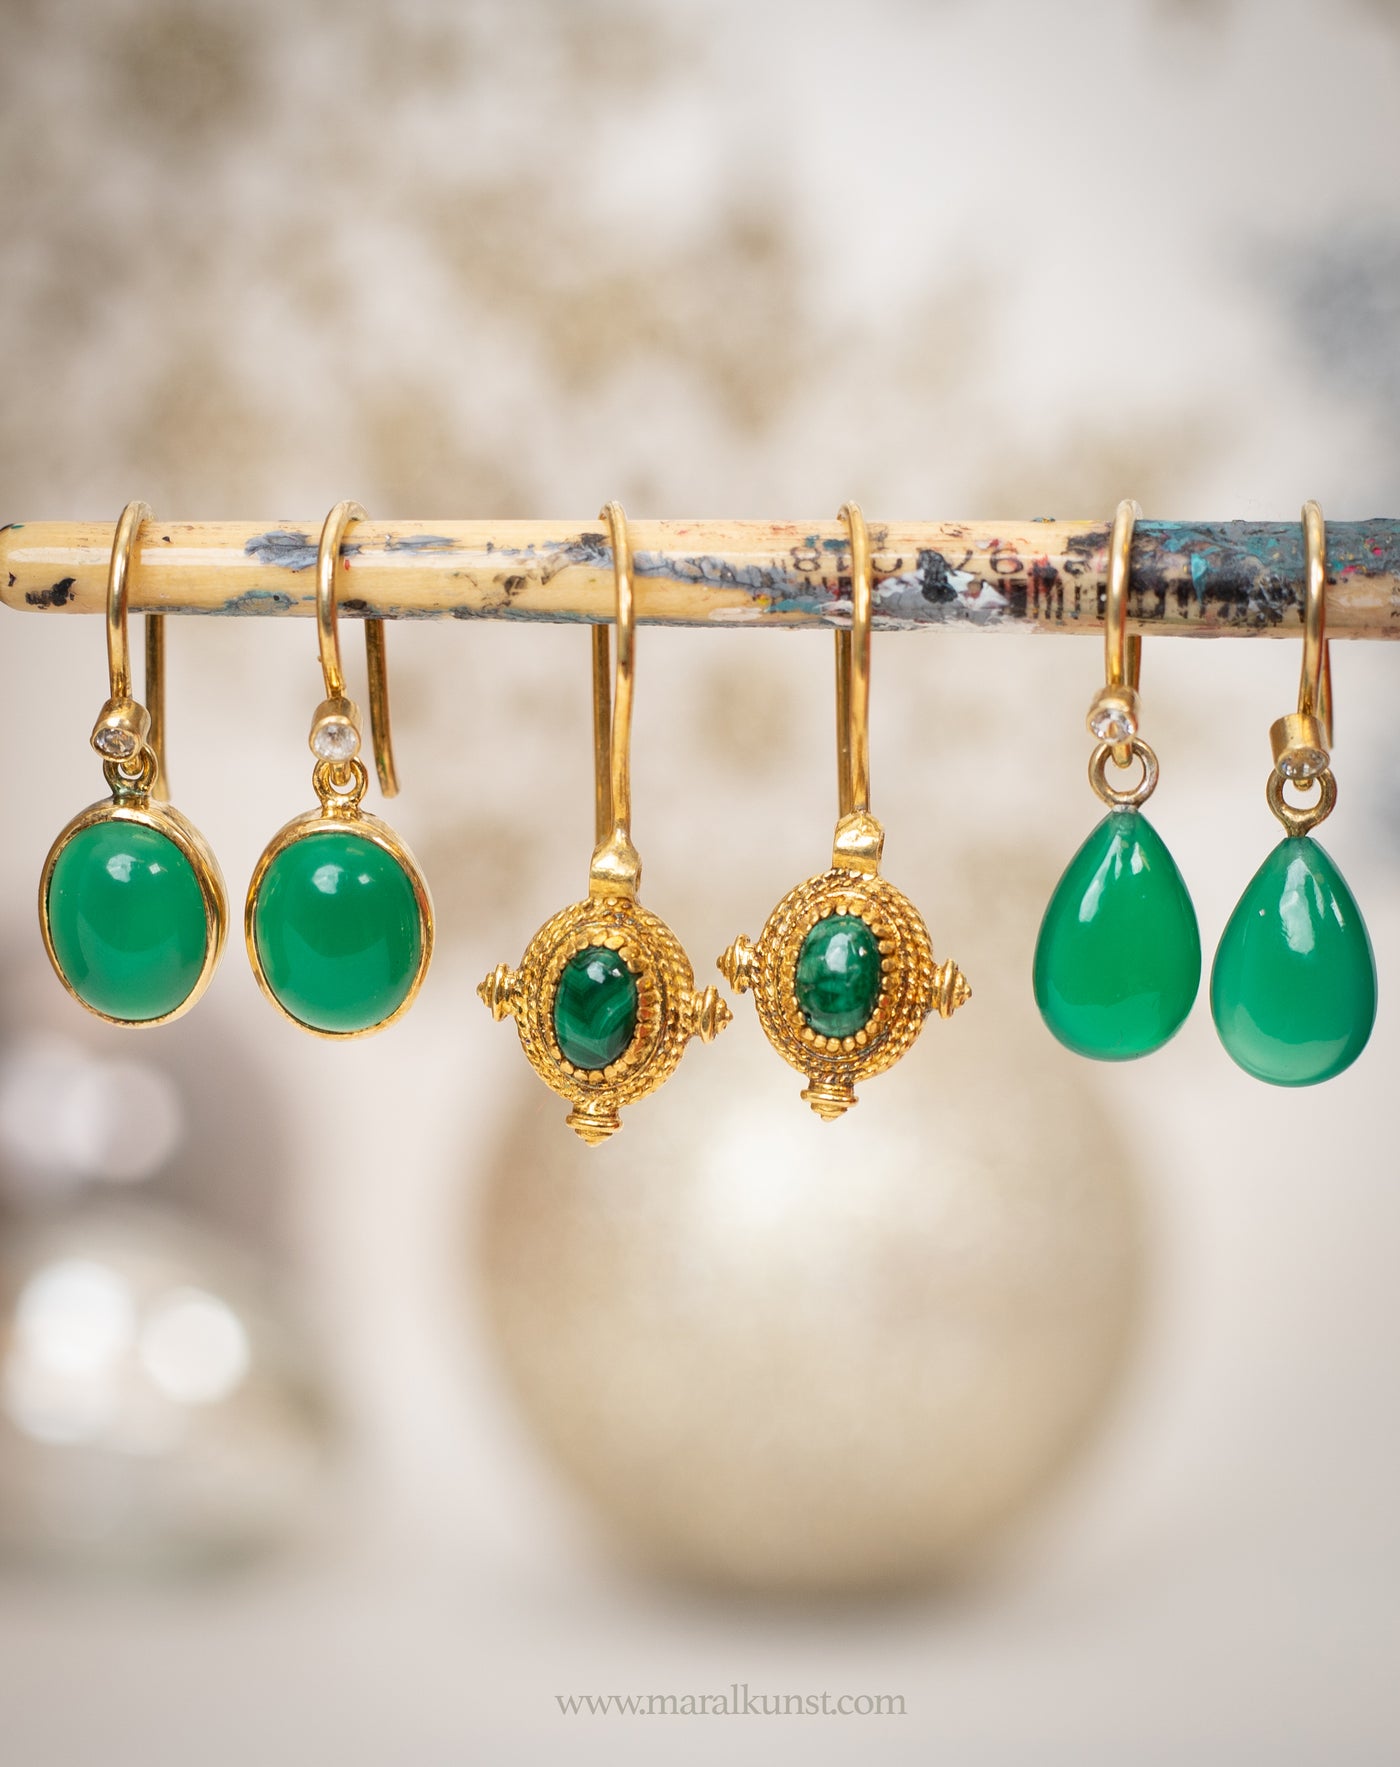 Green onyx Danish design earrings